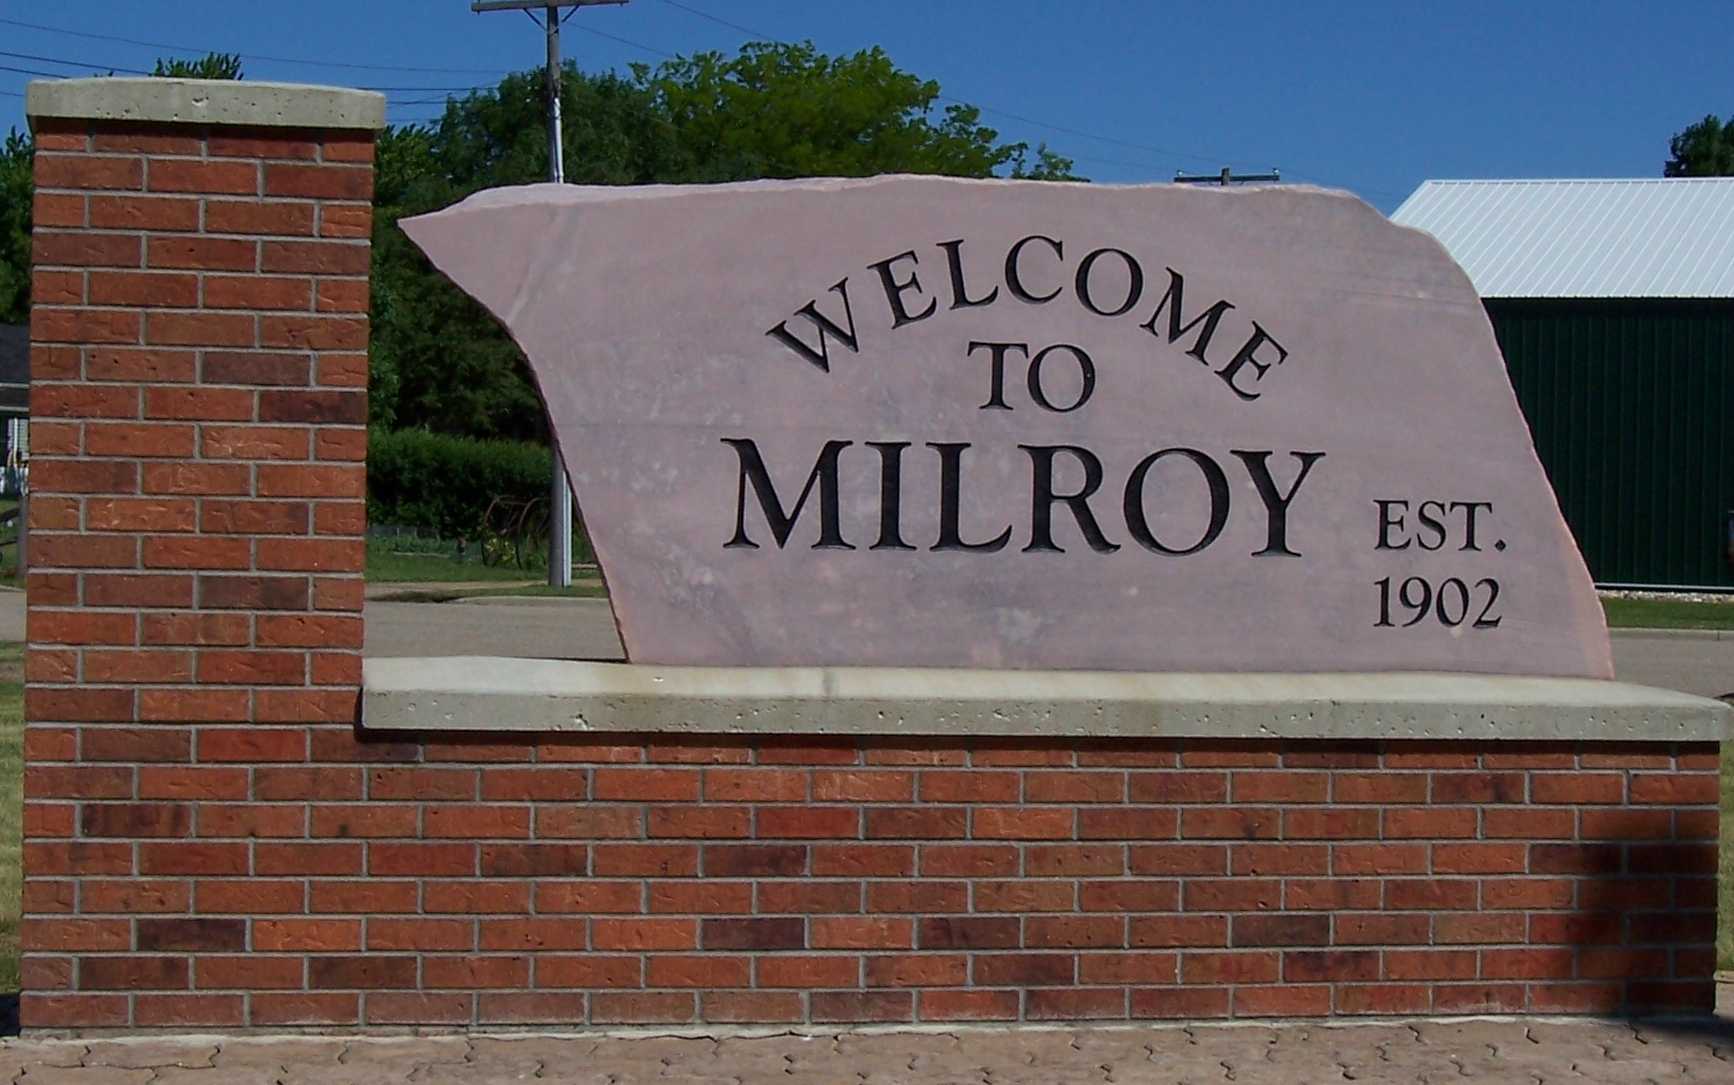 City of Milroy's Image